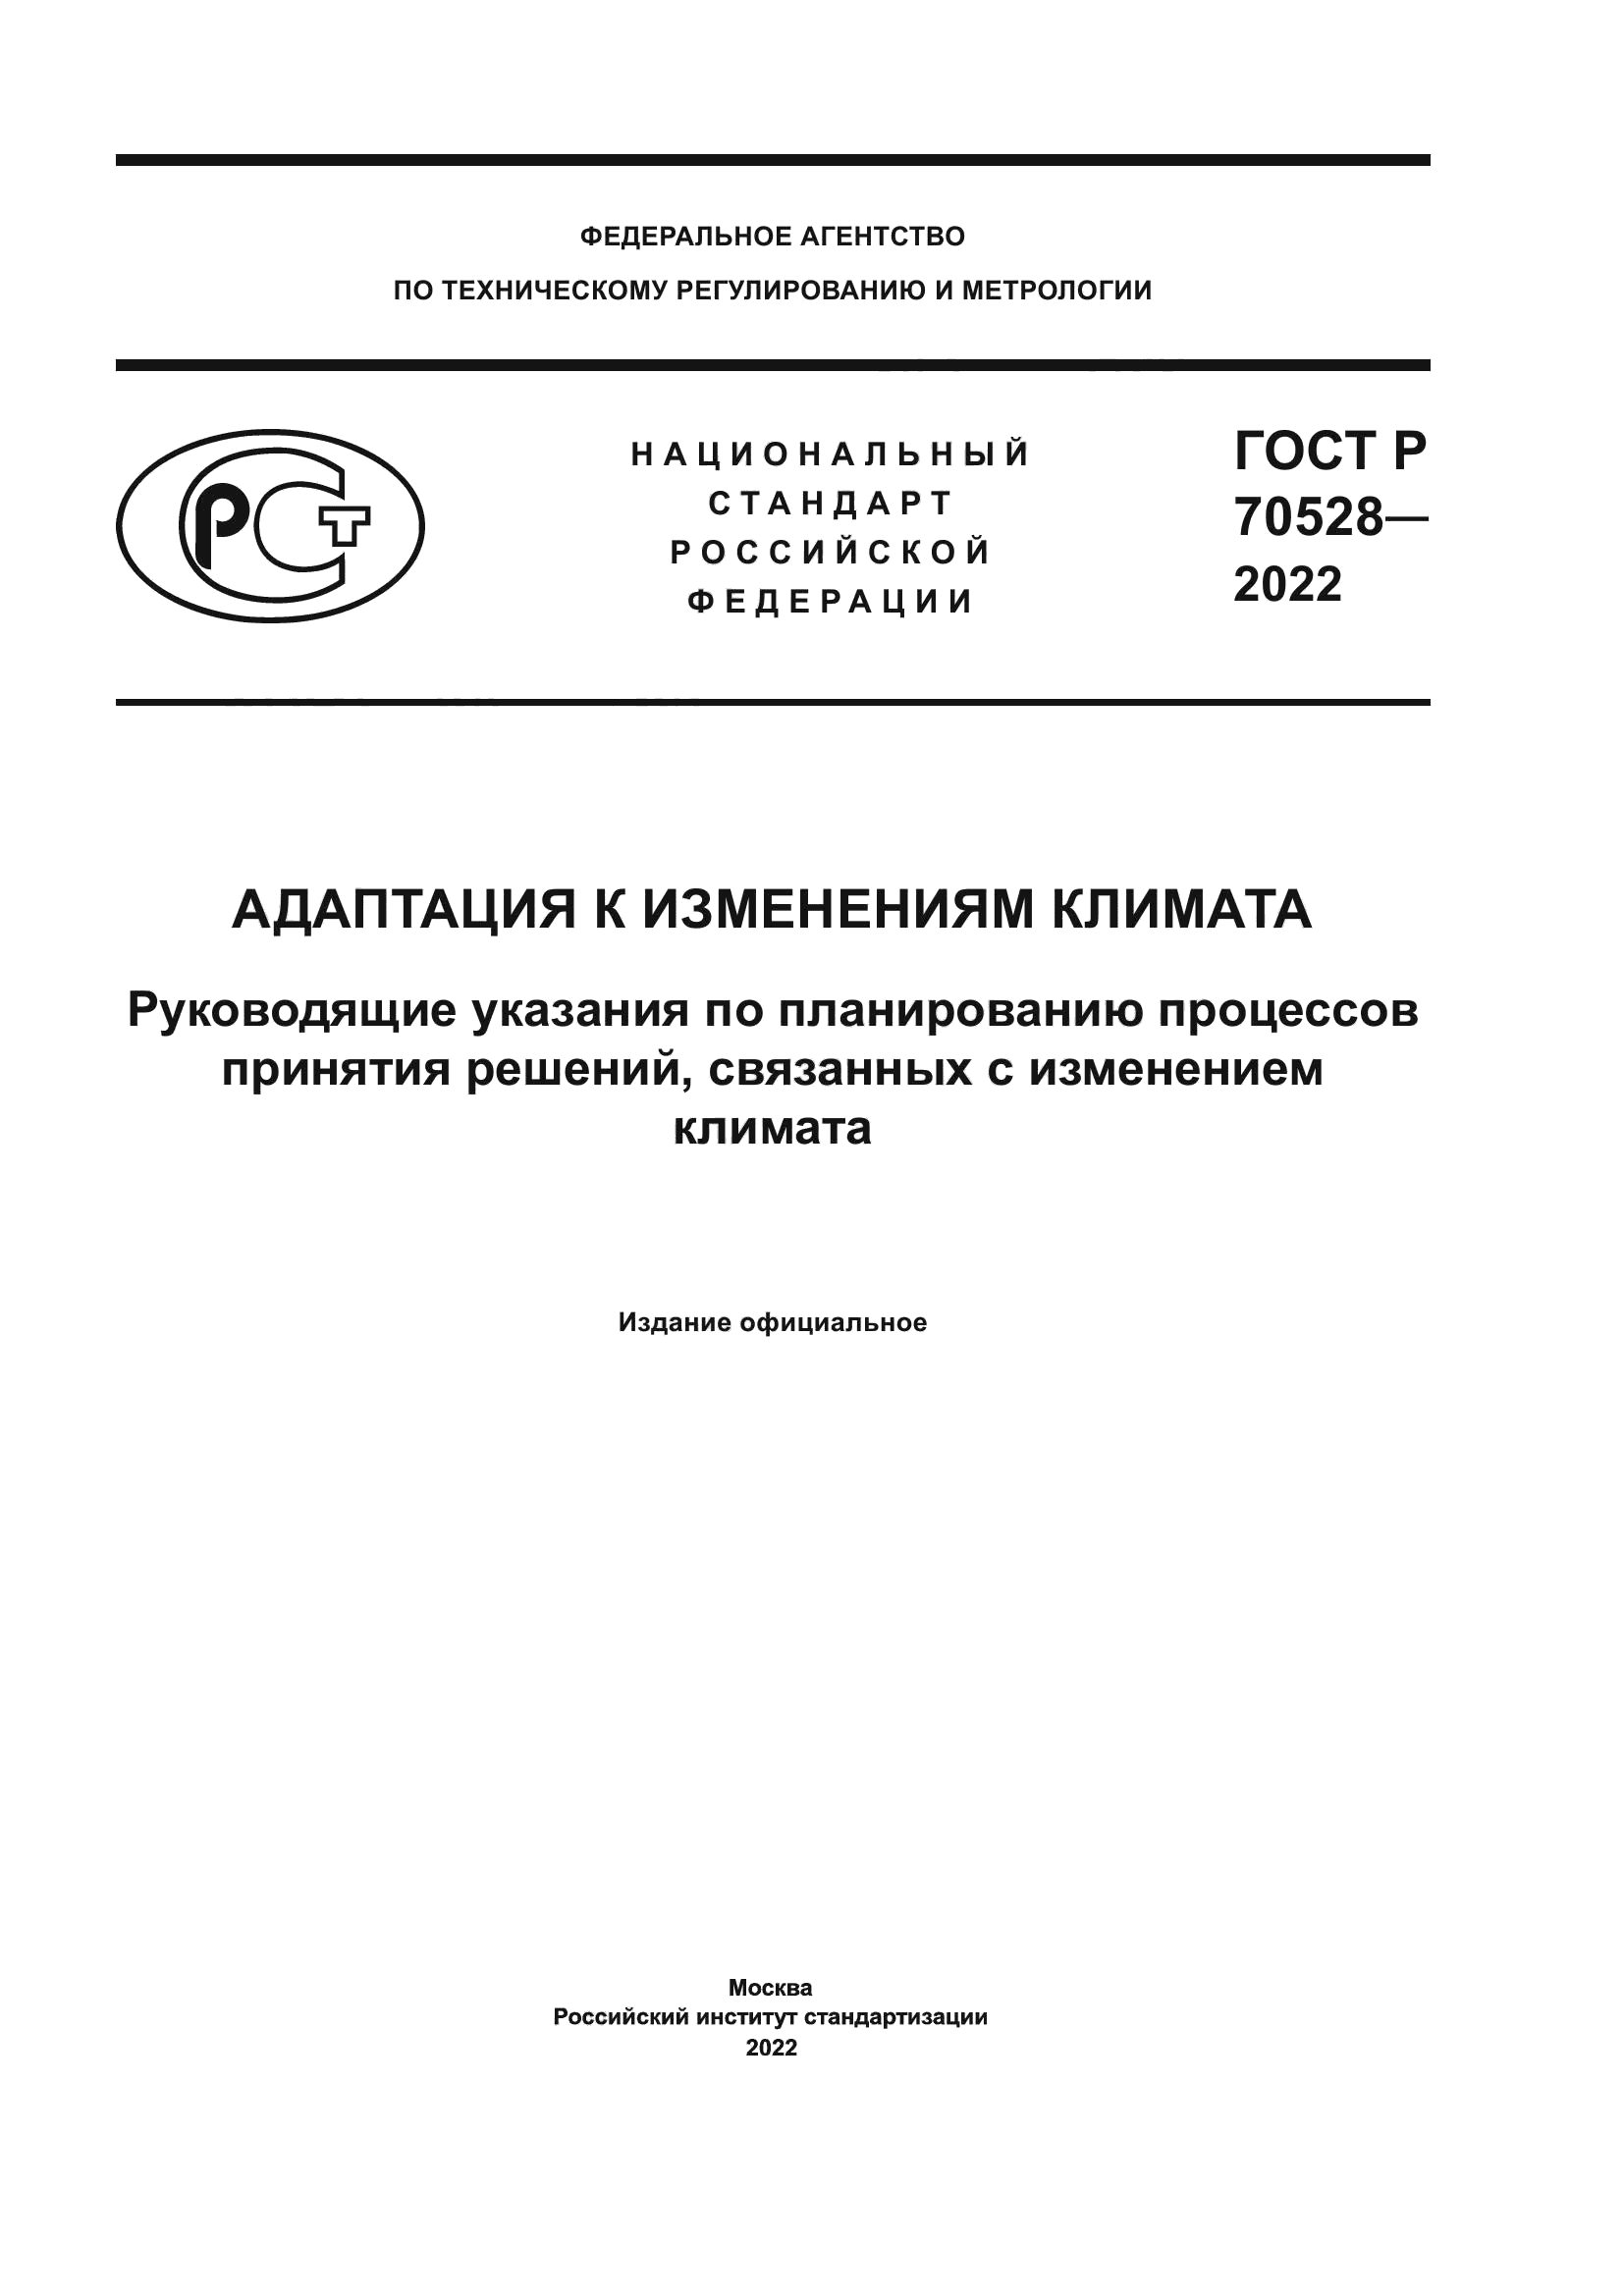 ГОСТ Р 70528-2022